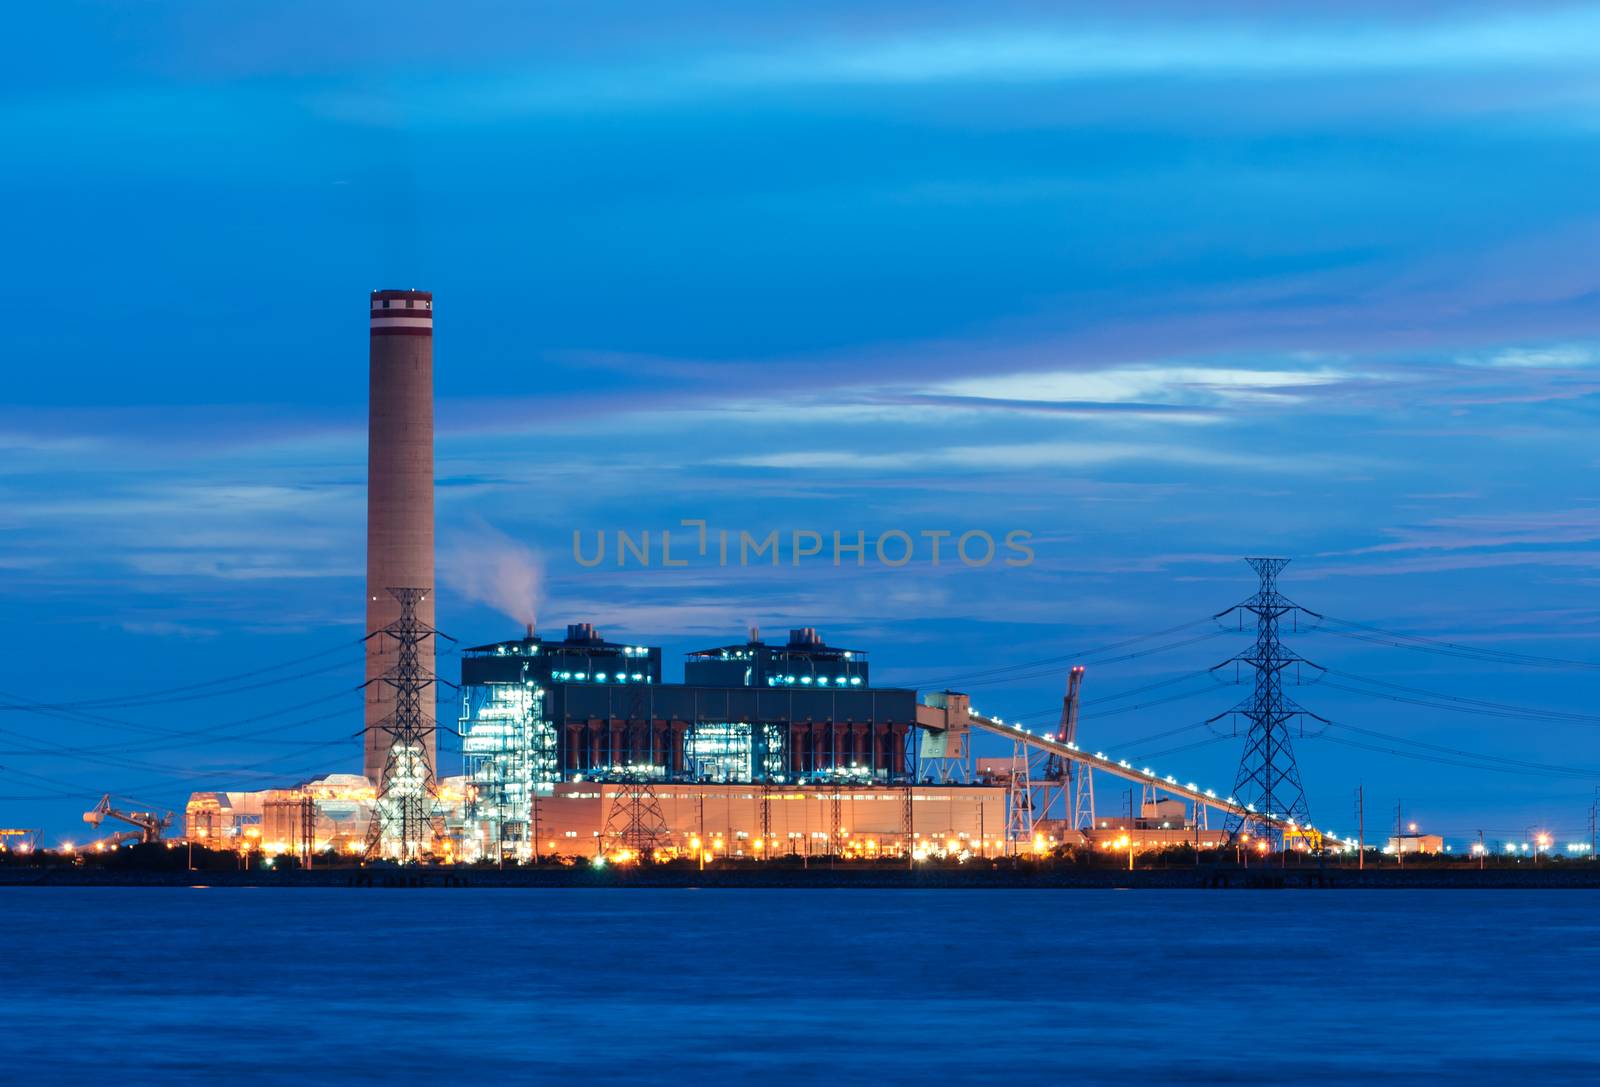 The power station by Sorapop